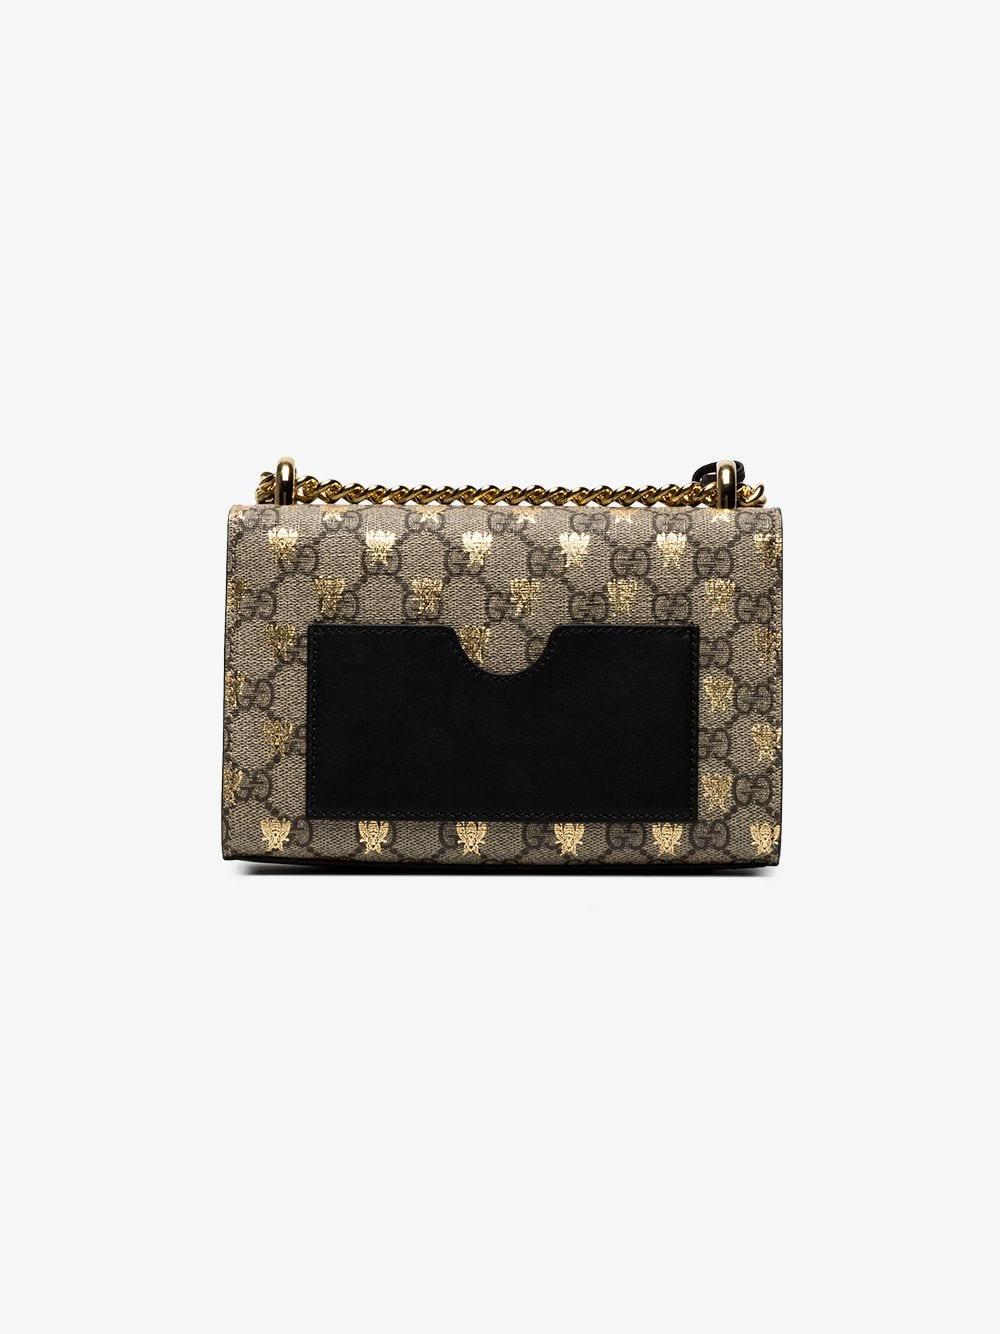 Lyst - Gucci Gold GG Bees Padlock Small Shoulder Bag